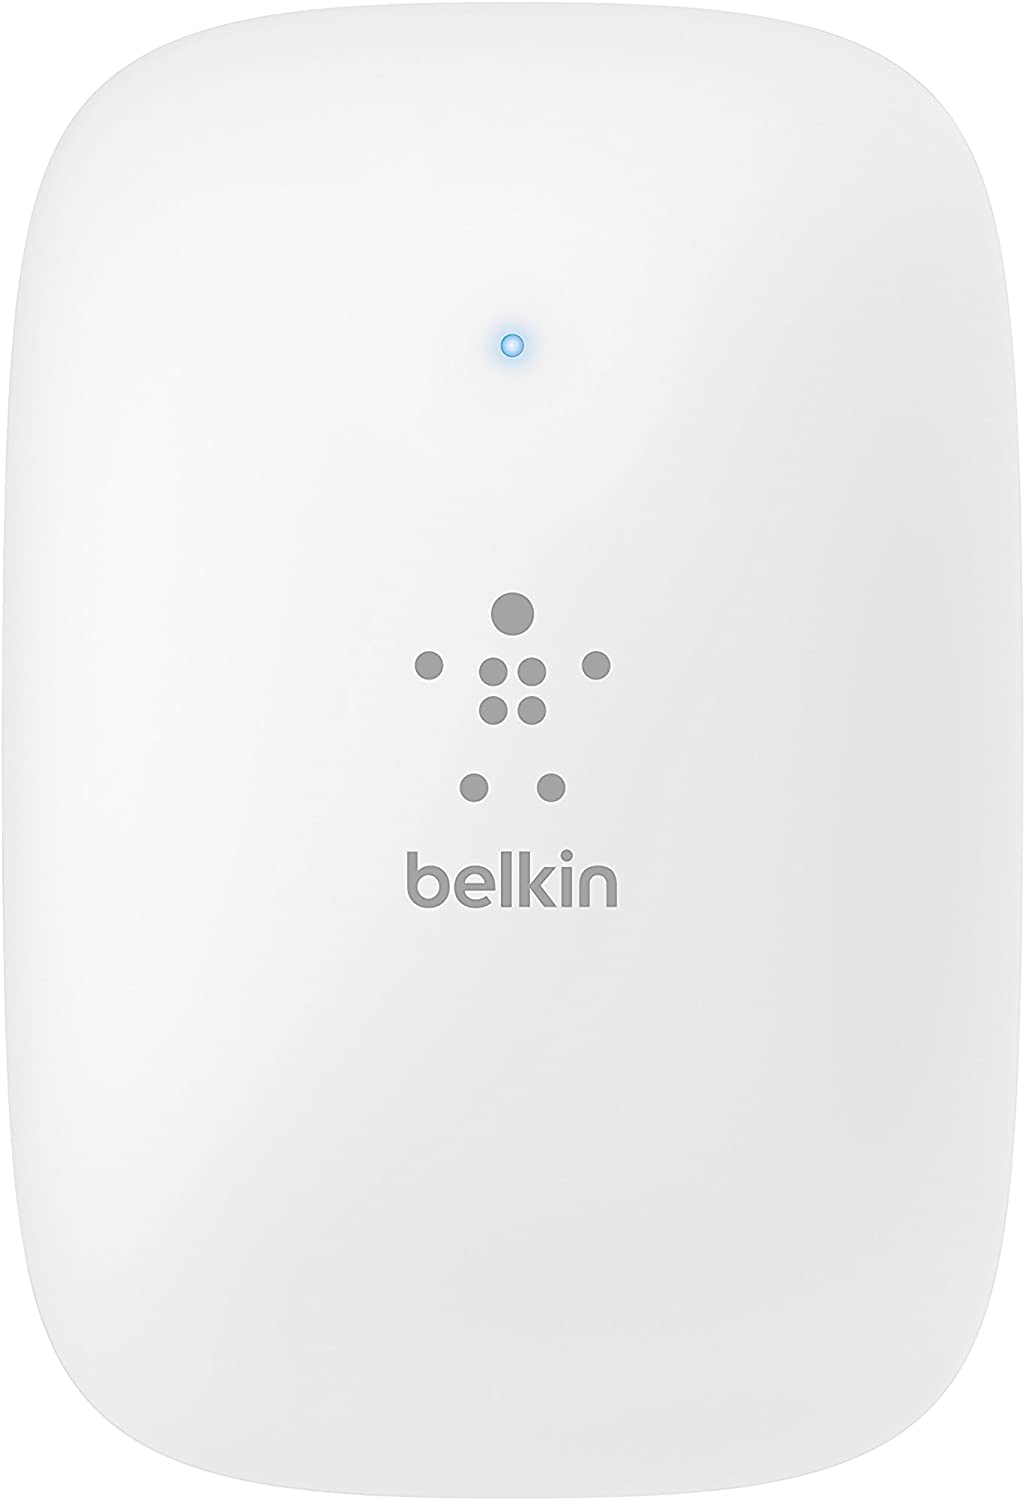 Belkin AC750 Dual Band AC Wireless Range Extender with Internal Antenna WP Smart Home